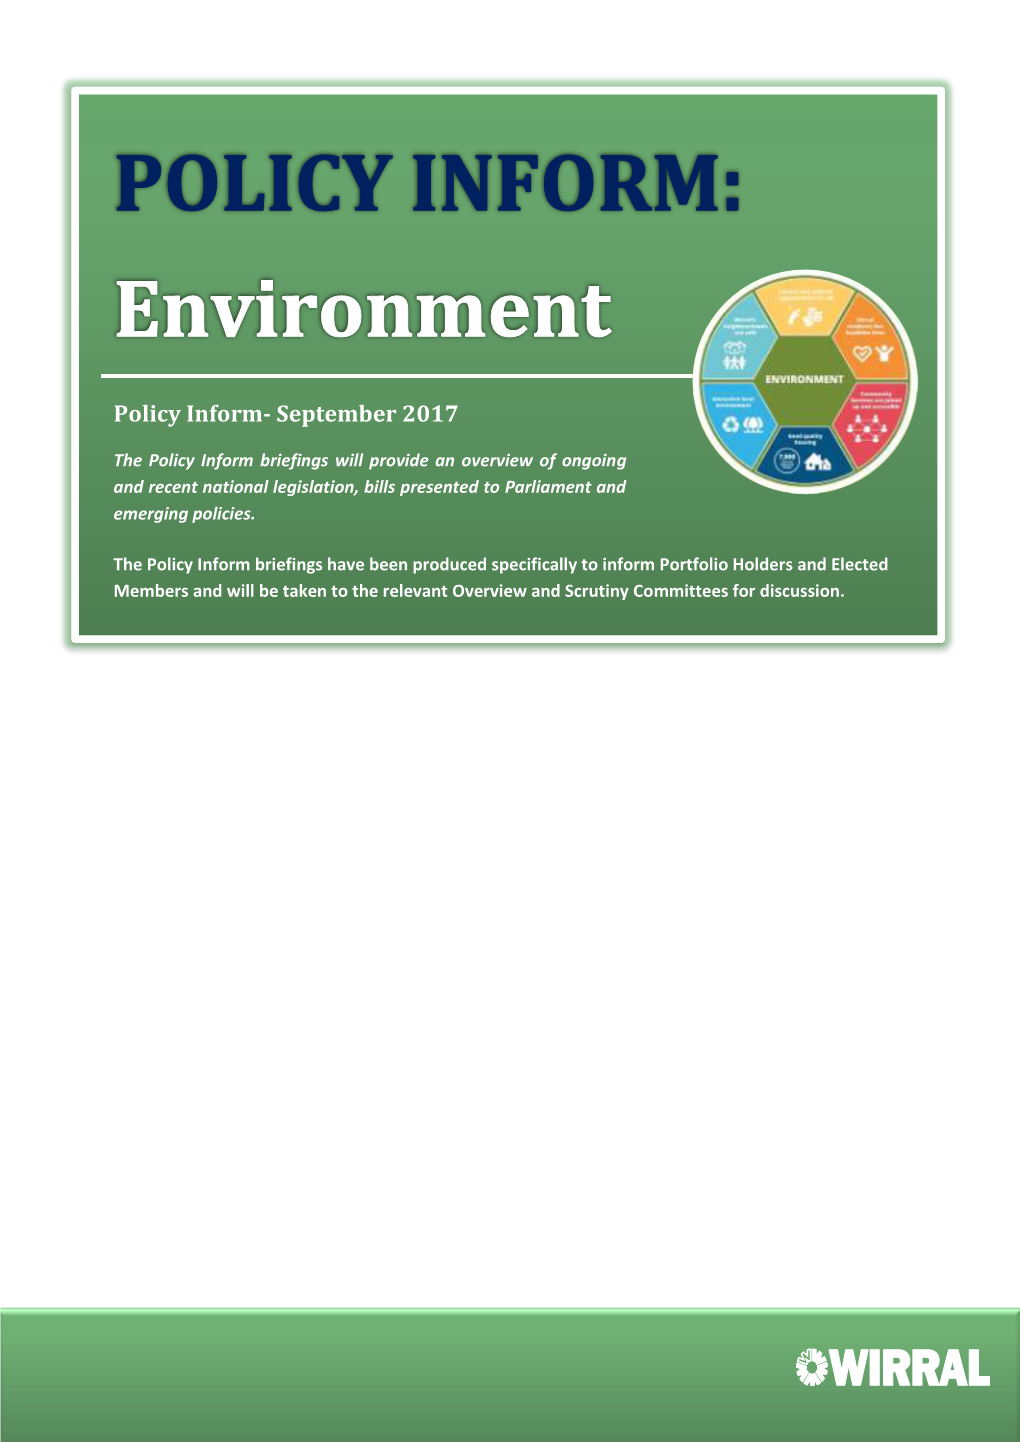 Policy Inform- September 2017